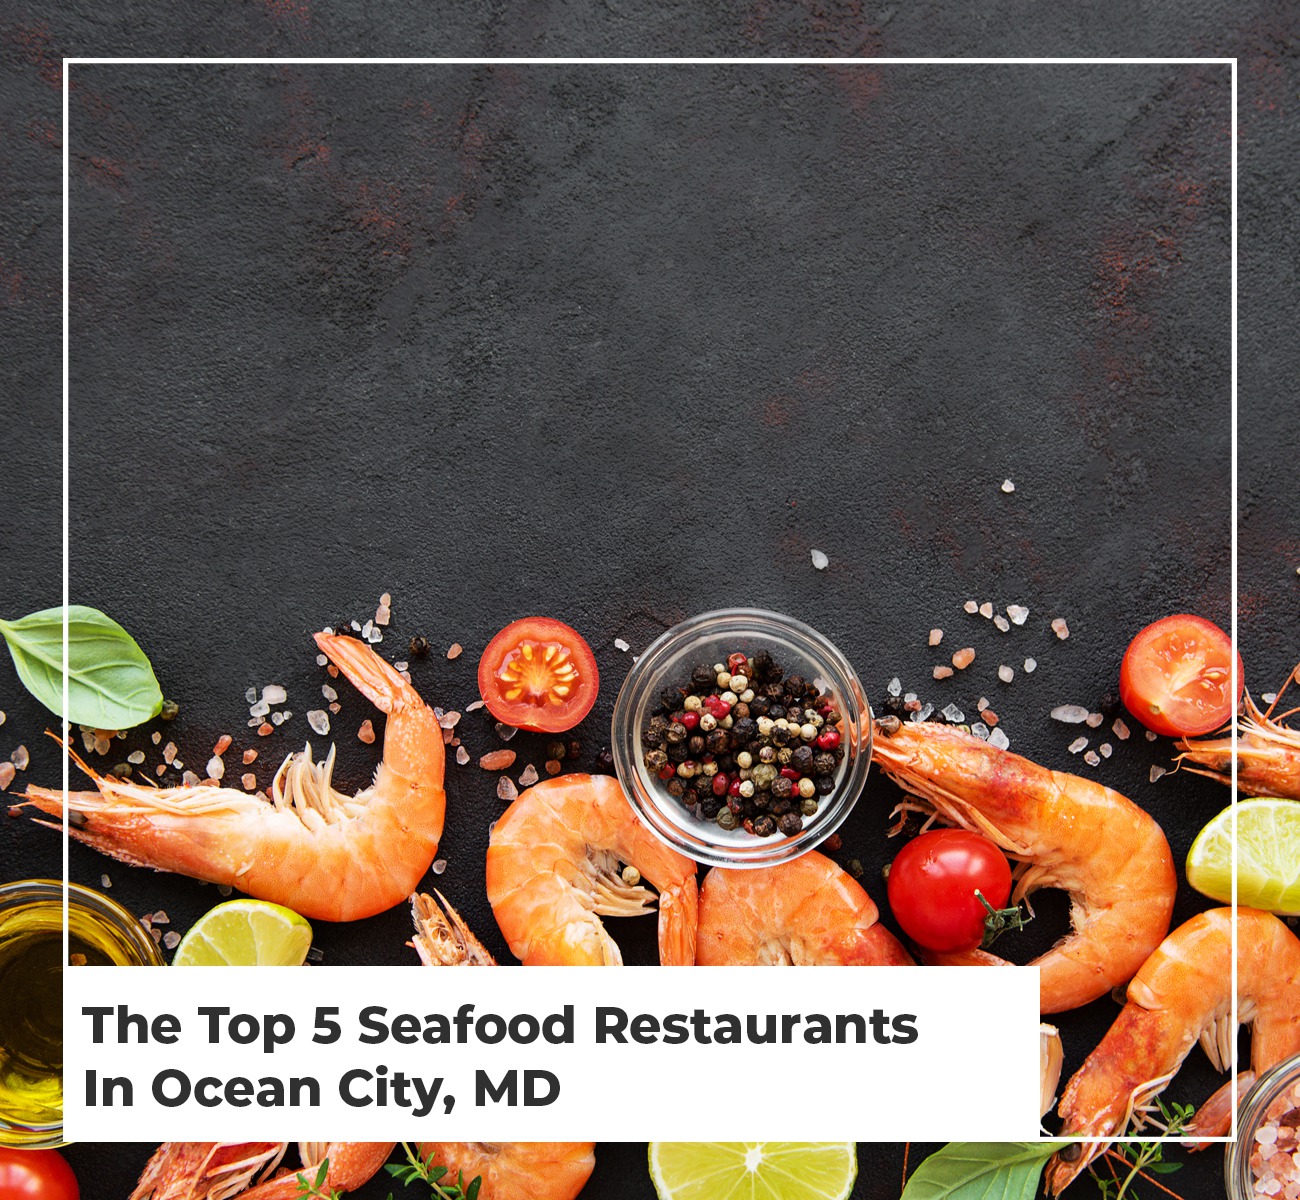 The Top 5 Seafood Restaurants In Ocean City, MD